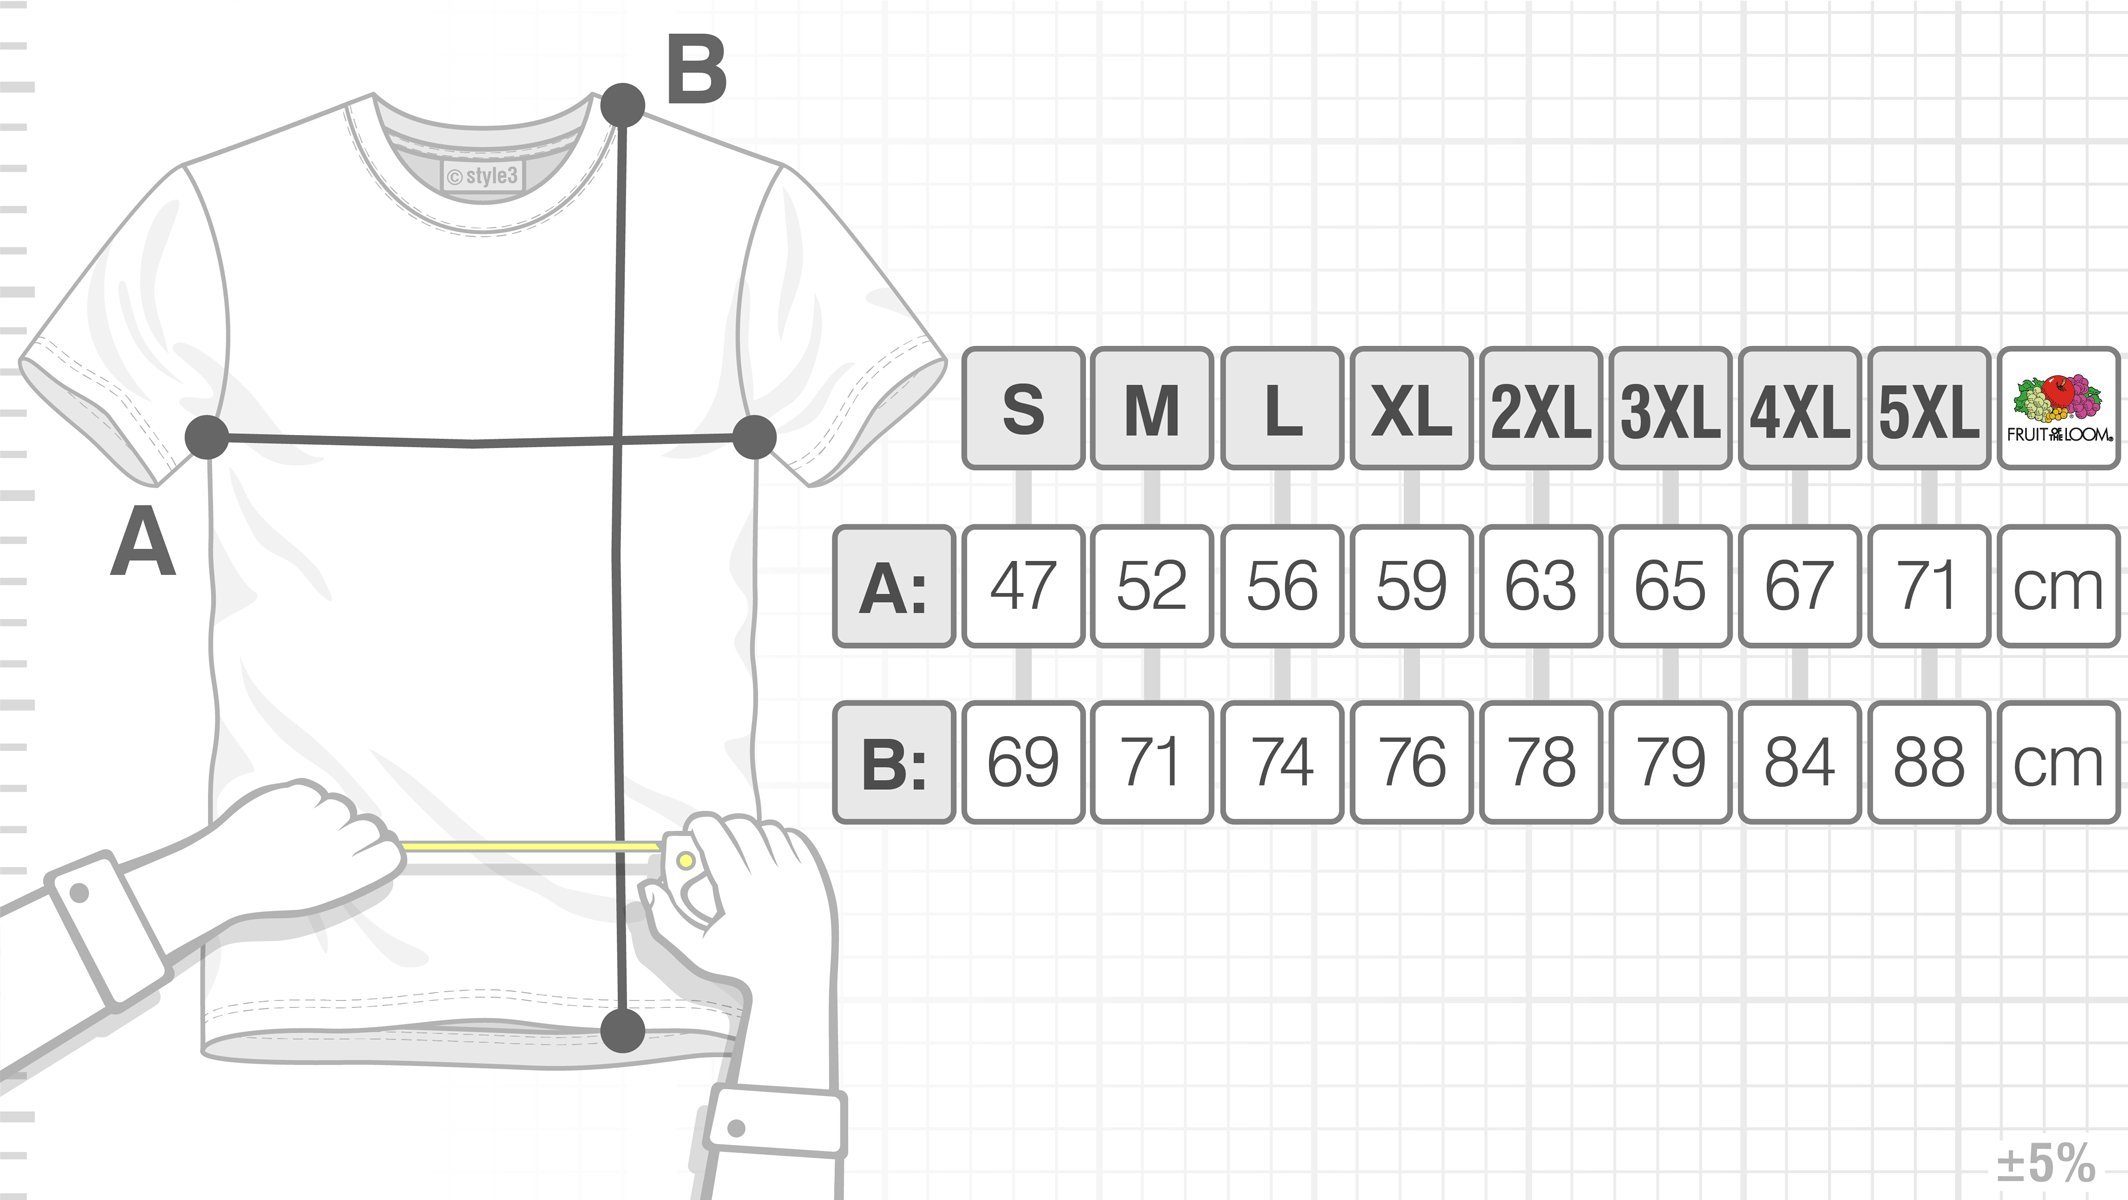 style3 Print-Shirt Herren T-Shirt hyrule pixel nes schwarz schwert Link cocolint 8-Bit